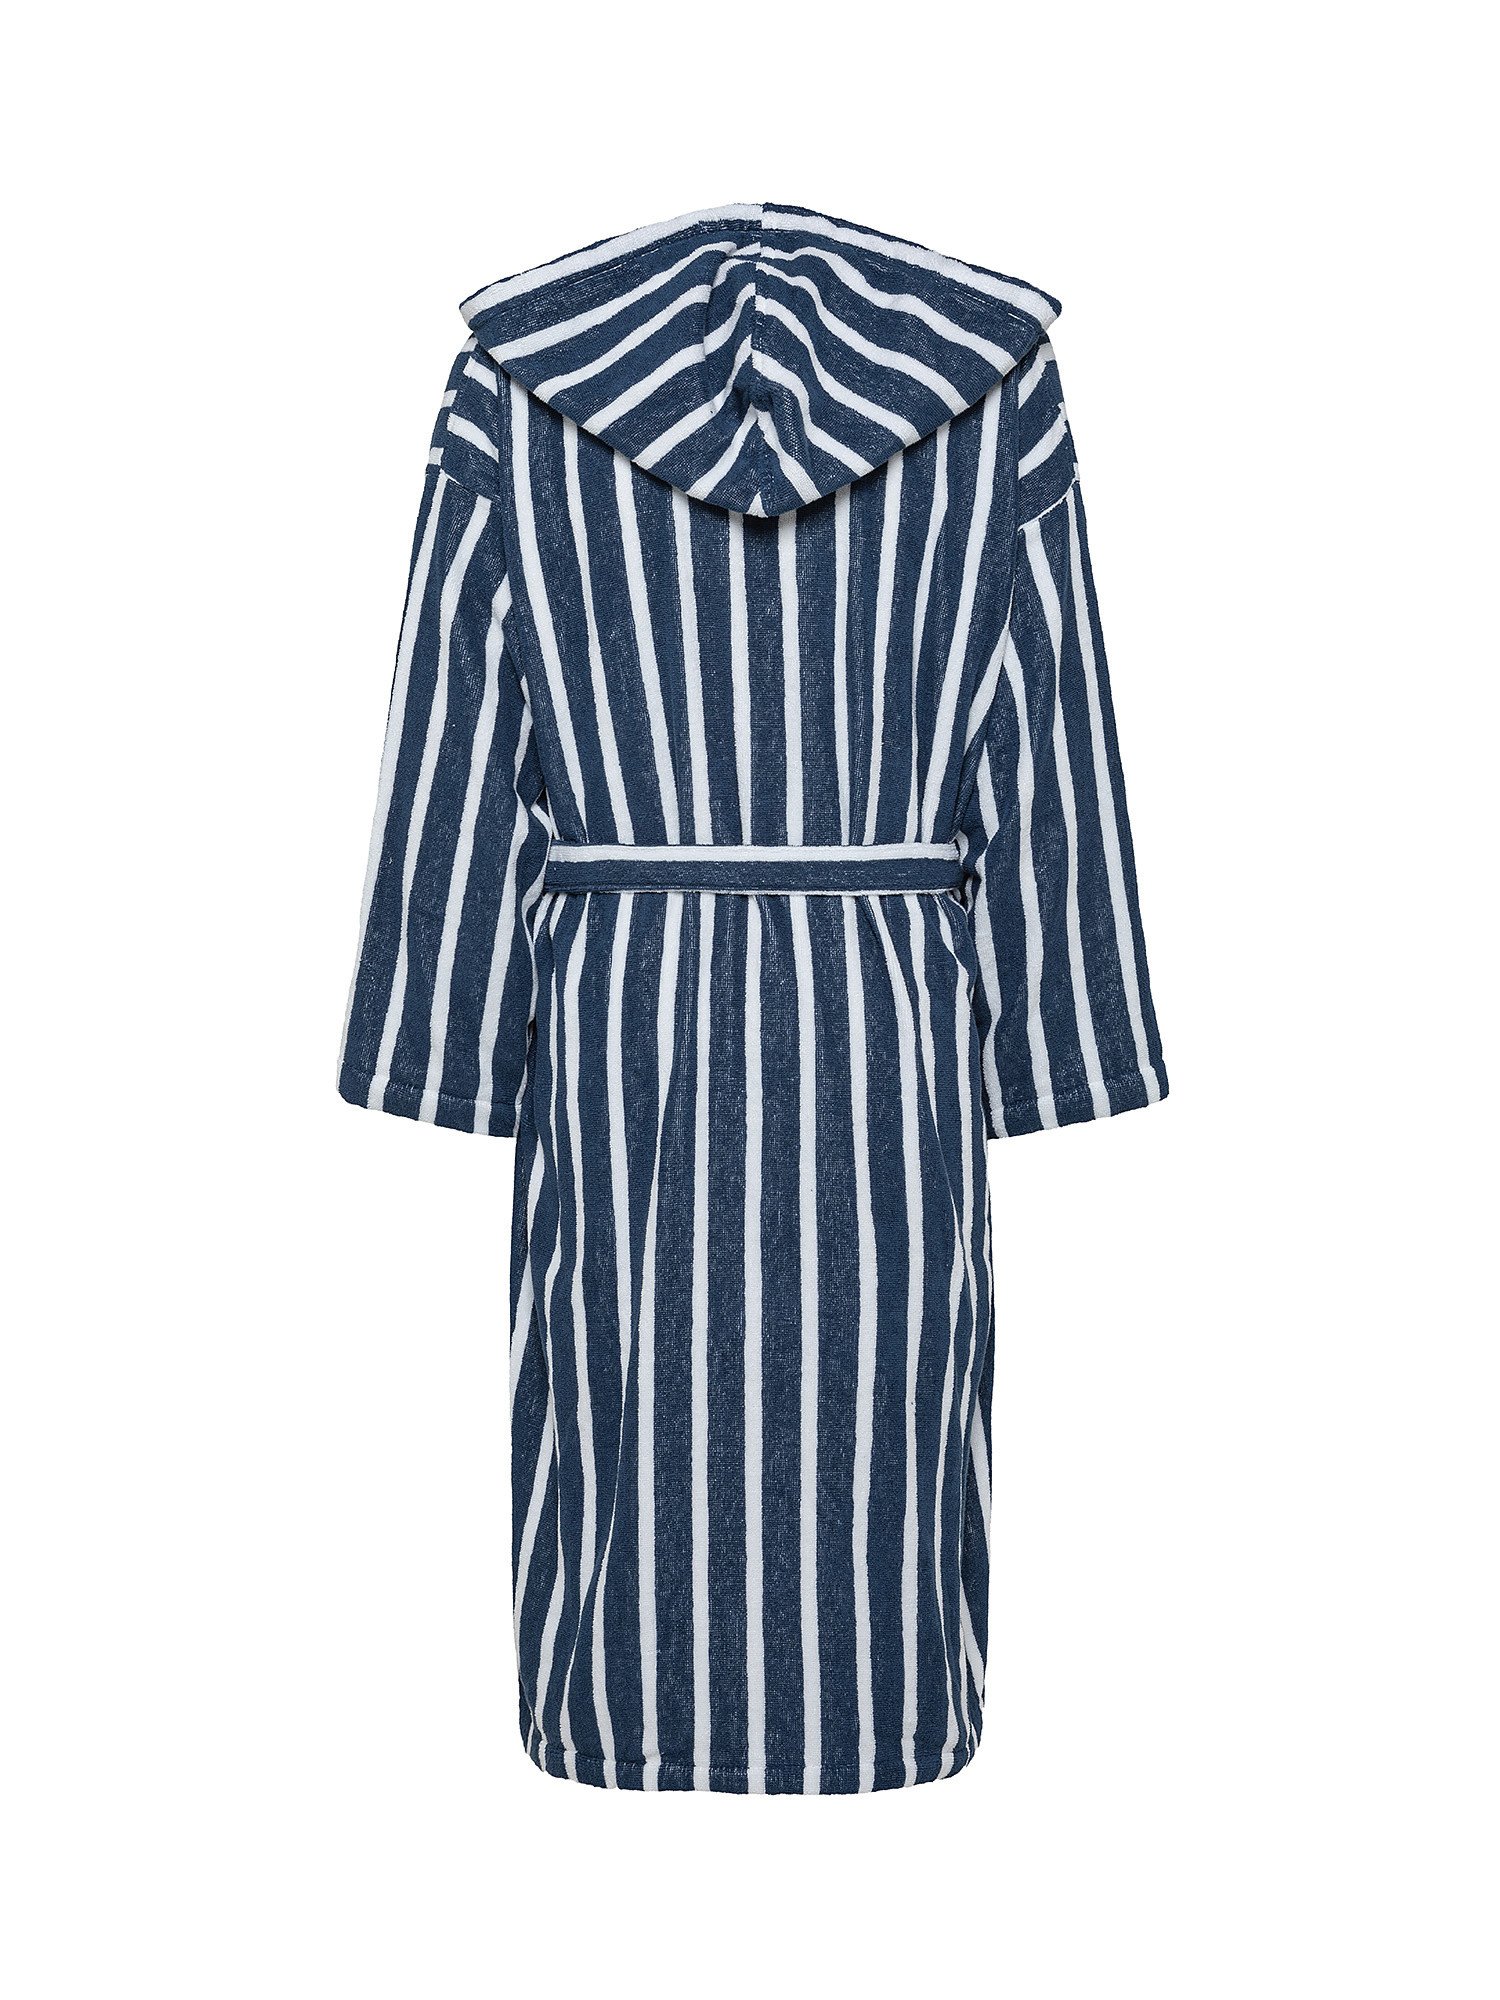 Striped velor cotton bathrobe, Blue, large image number 1